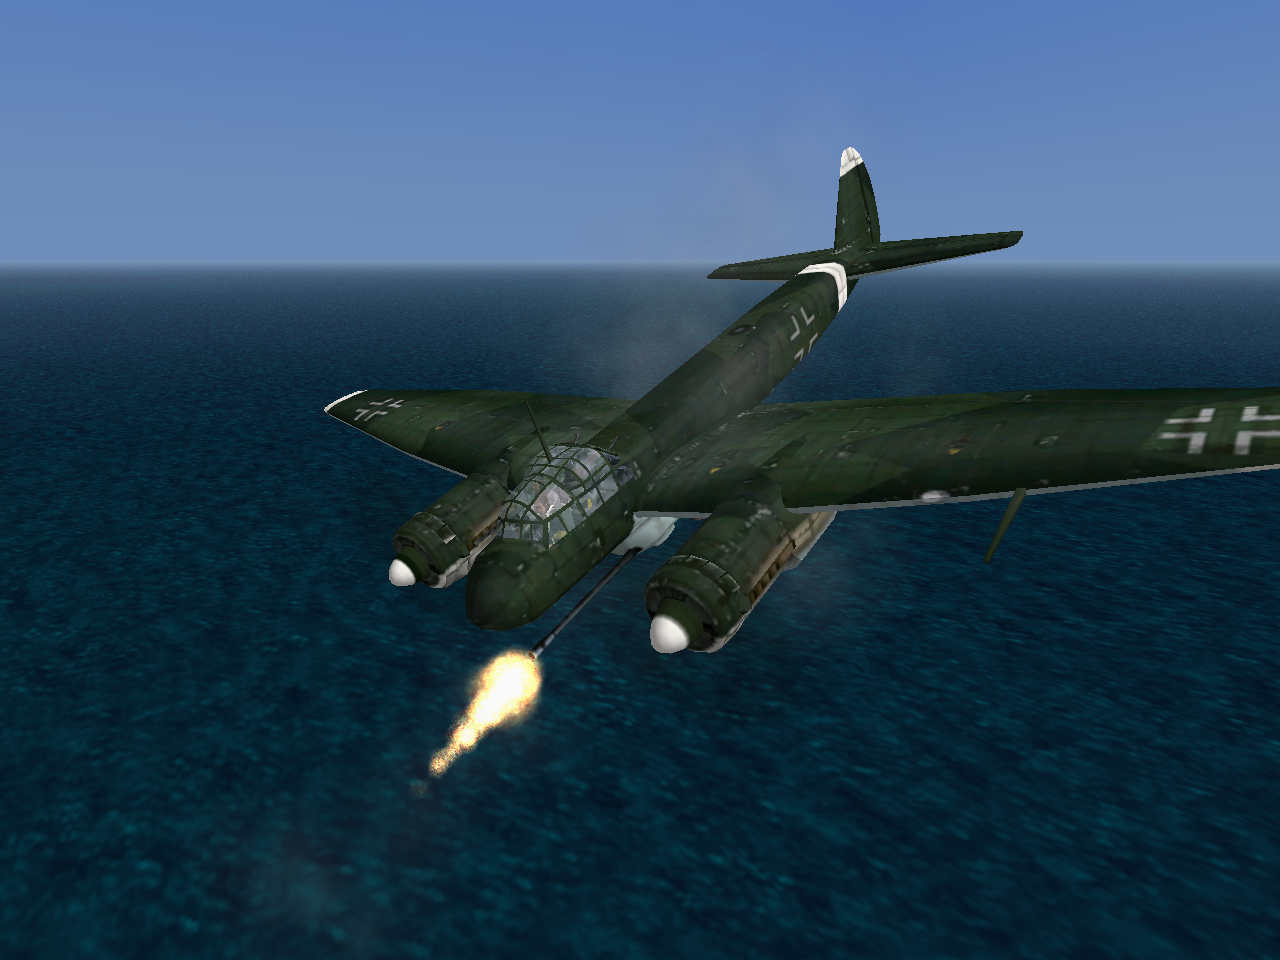 Combat flights